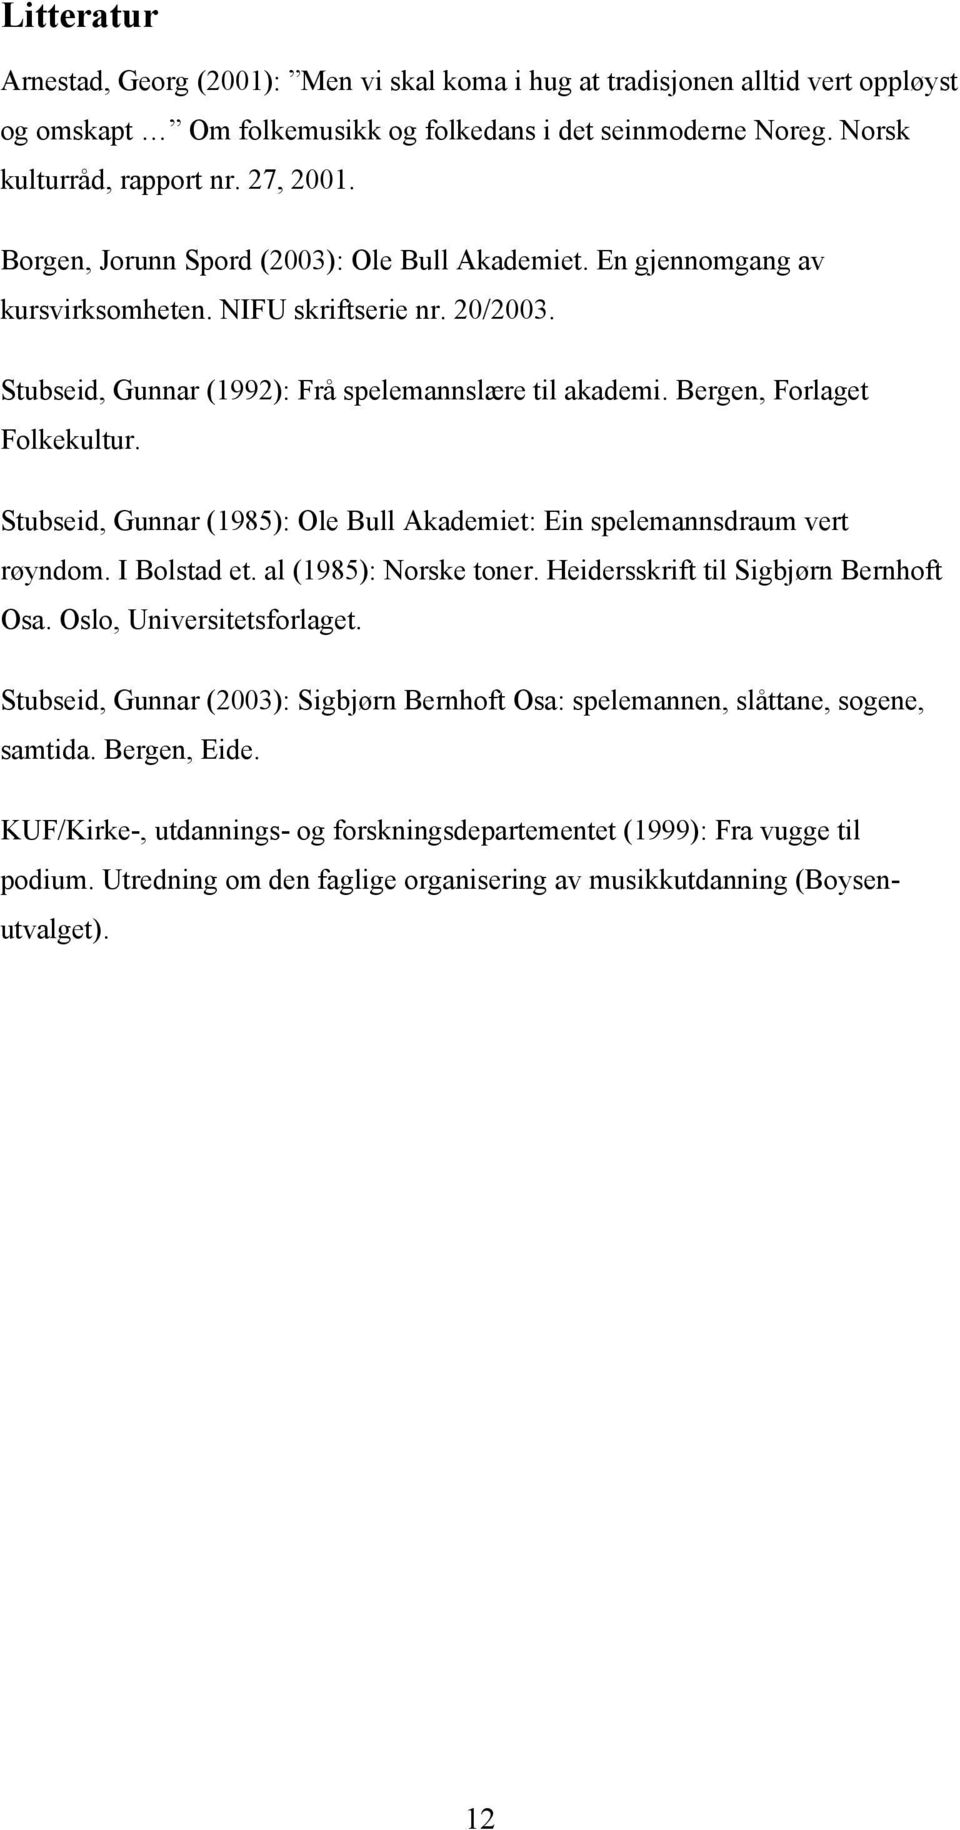 Bergen, Forlaget Folkekultur. Stubseid, Gunnar (1985): Ole Bull Akademiet: Ein spelemannsdraum vert røyndom. I Bolstad et. al (1985): Norske toner. Heidersskrift til Sigbjørn Bernhoft Osa.